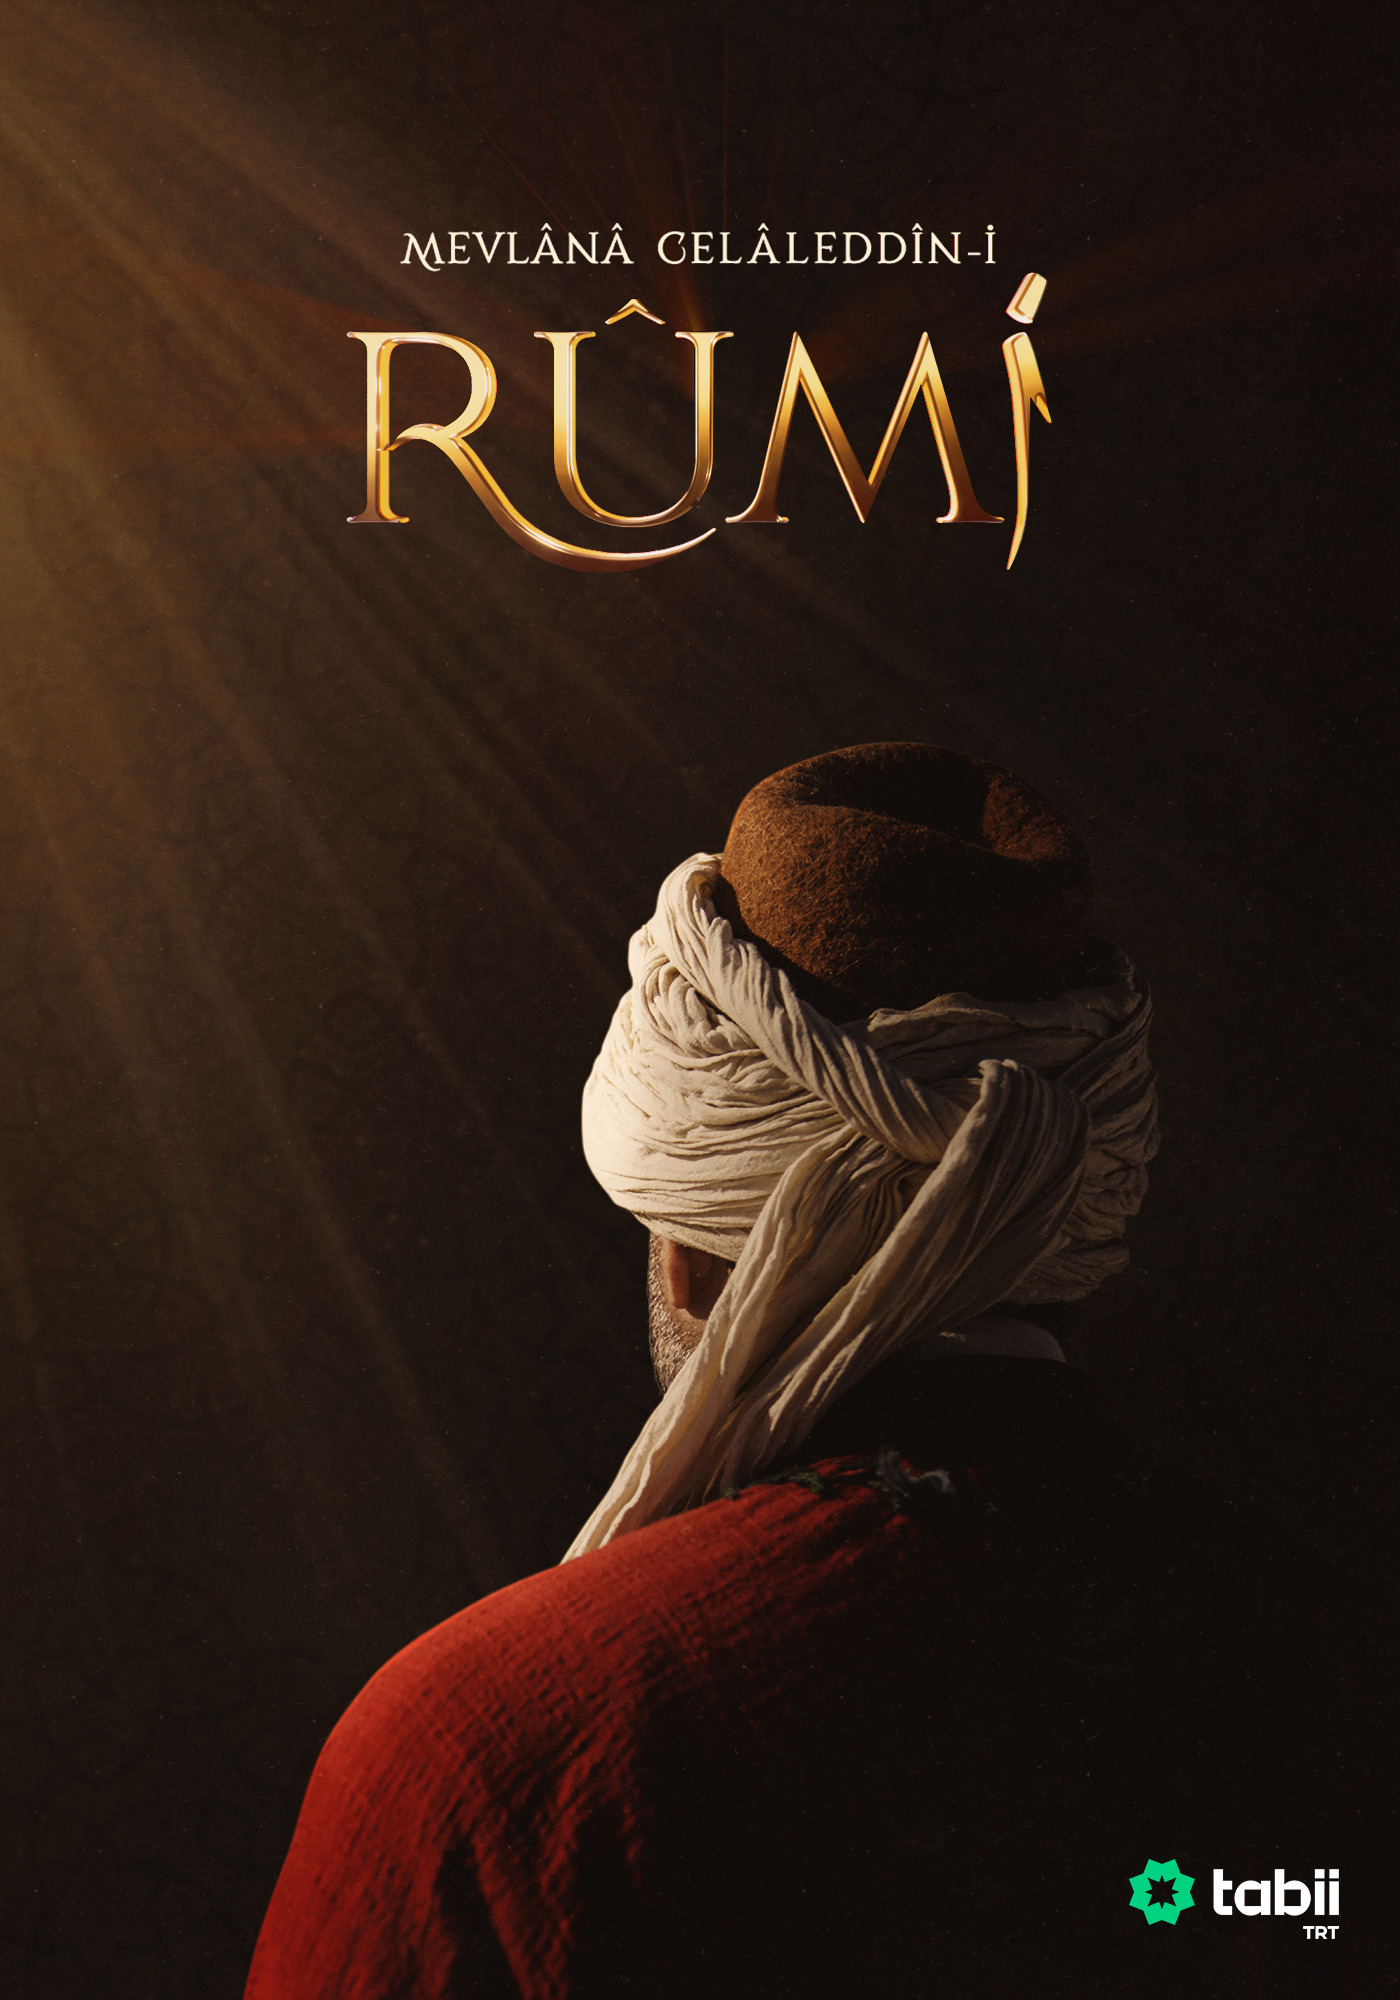 Mega Sized TV Poster Image for Rumi 